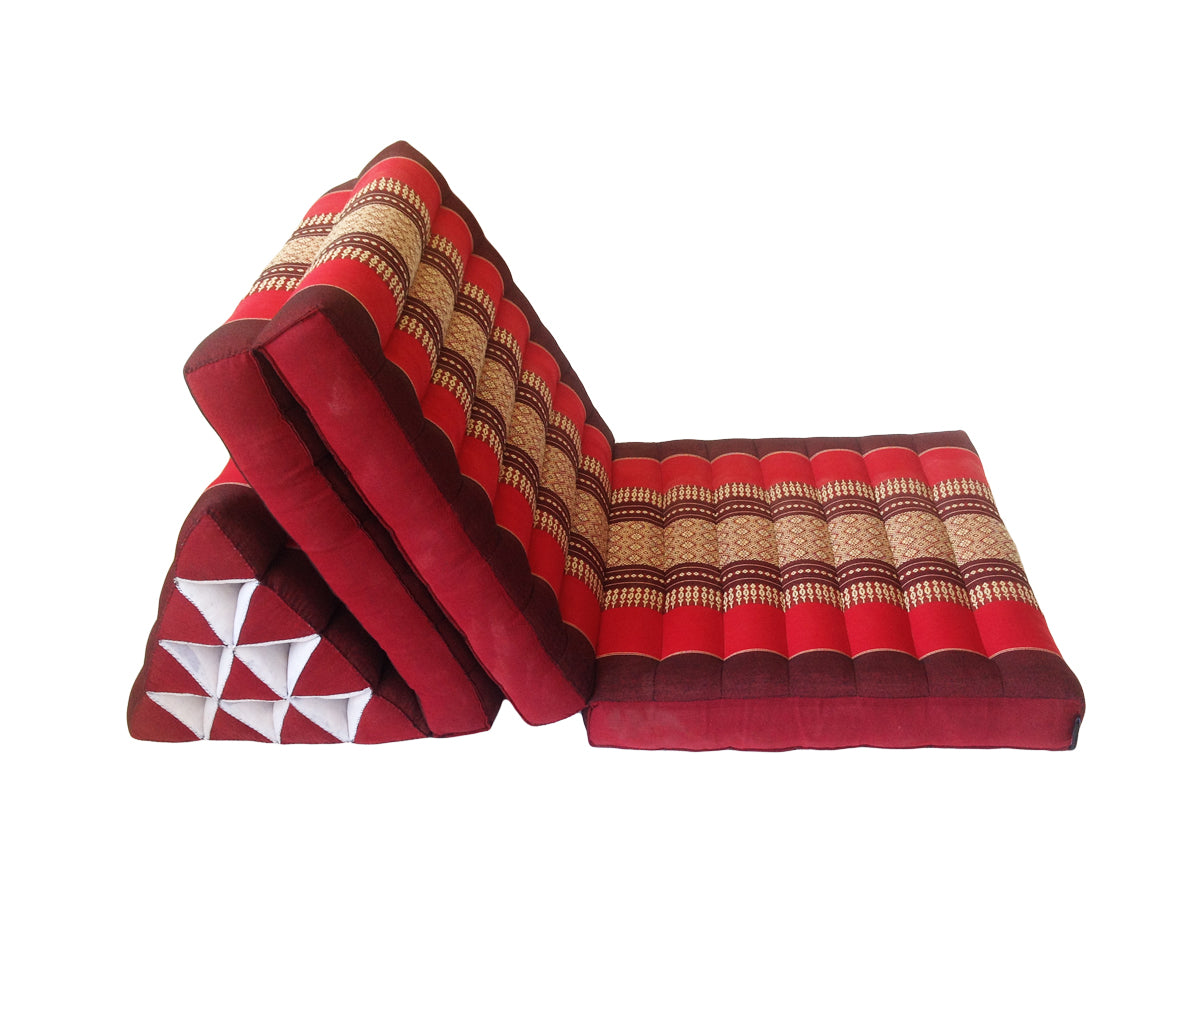 Thai Kapok 3 Fold Mattress with Triangle Cushion (Red, Maroon)